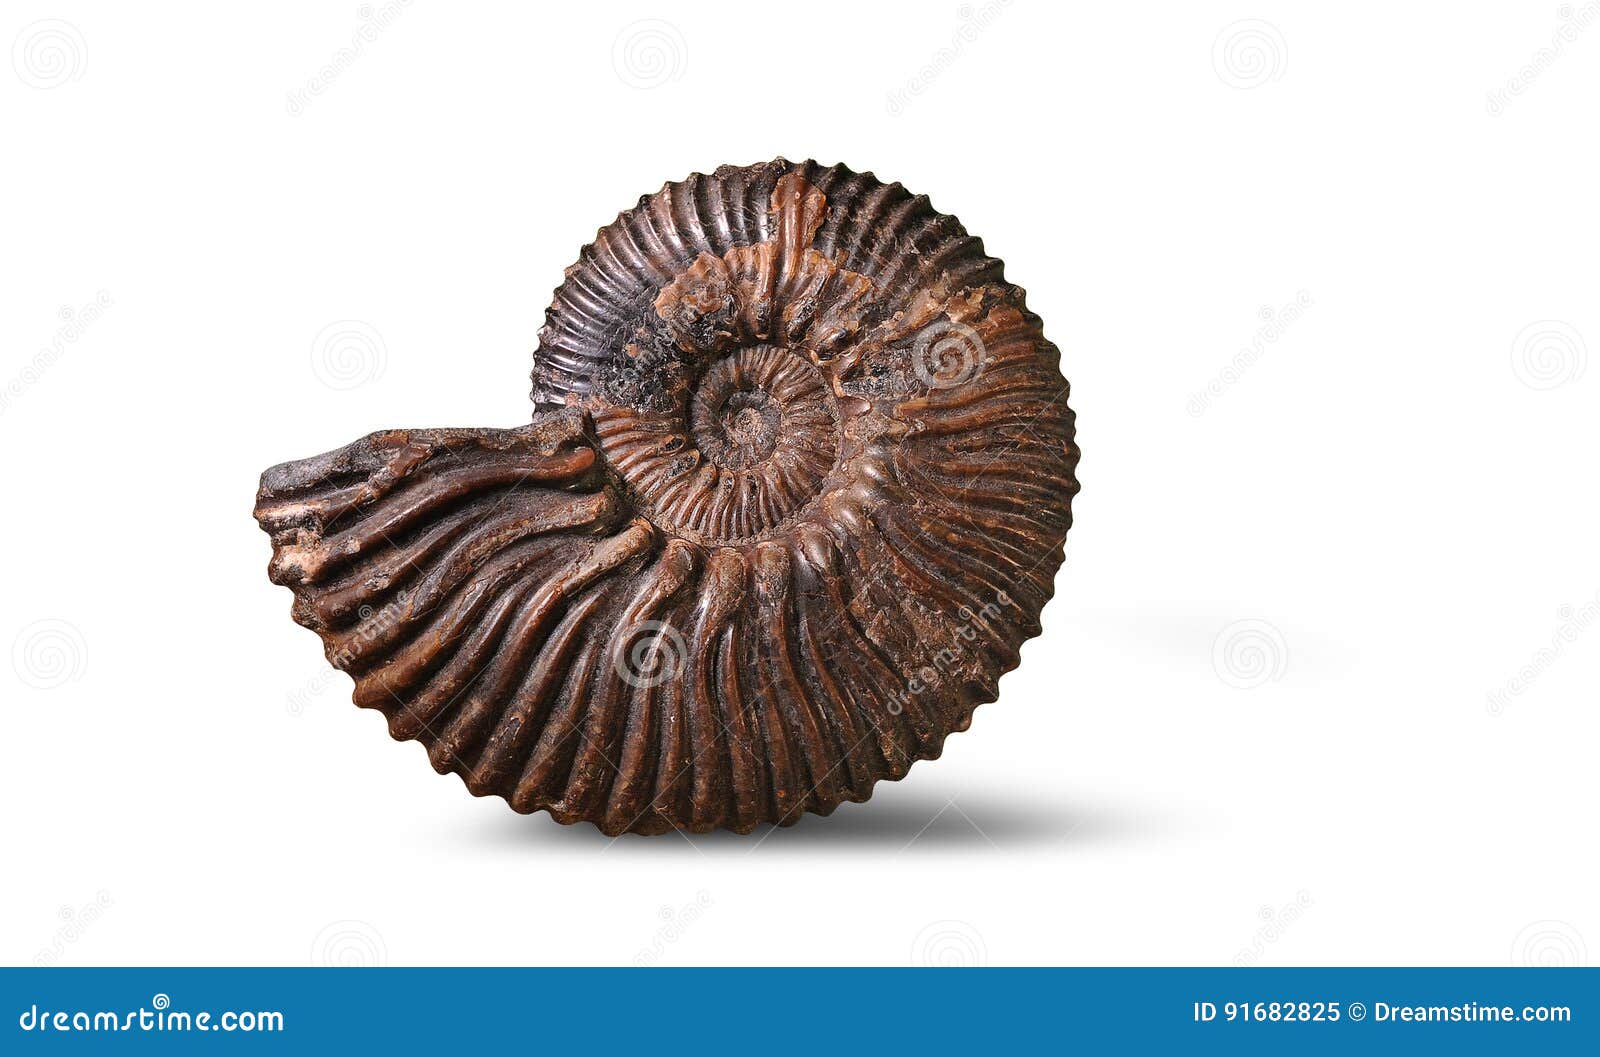 ammonite - fossil mollusk.